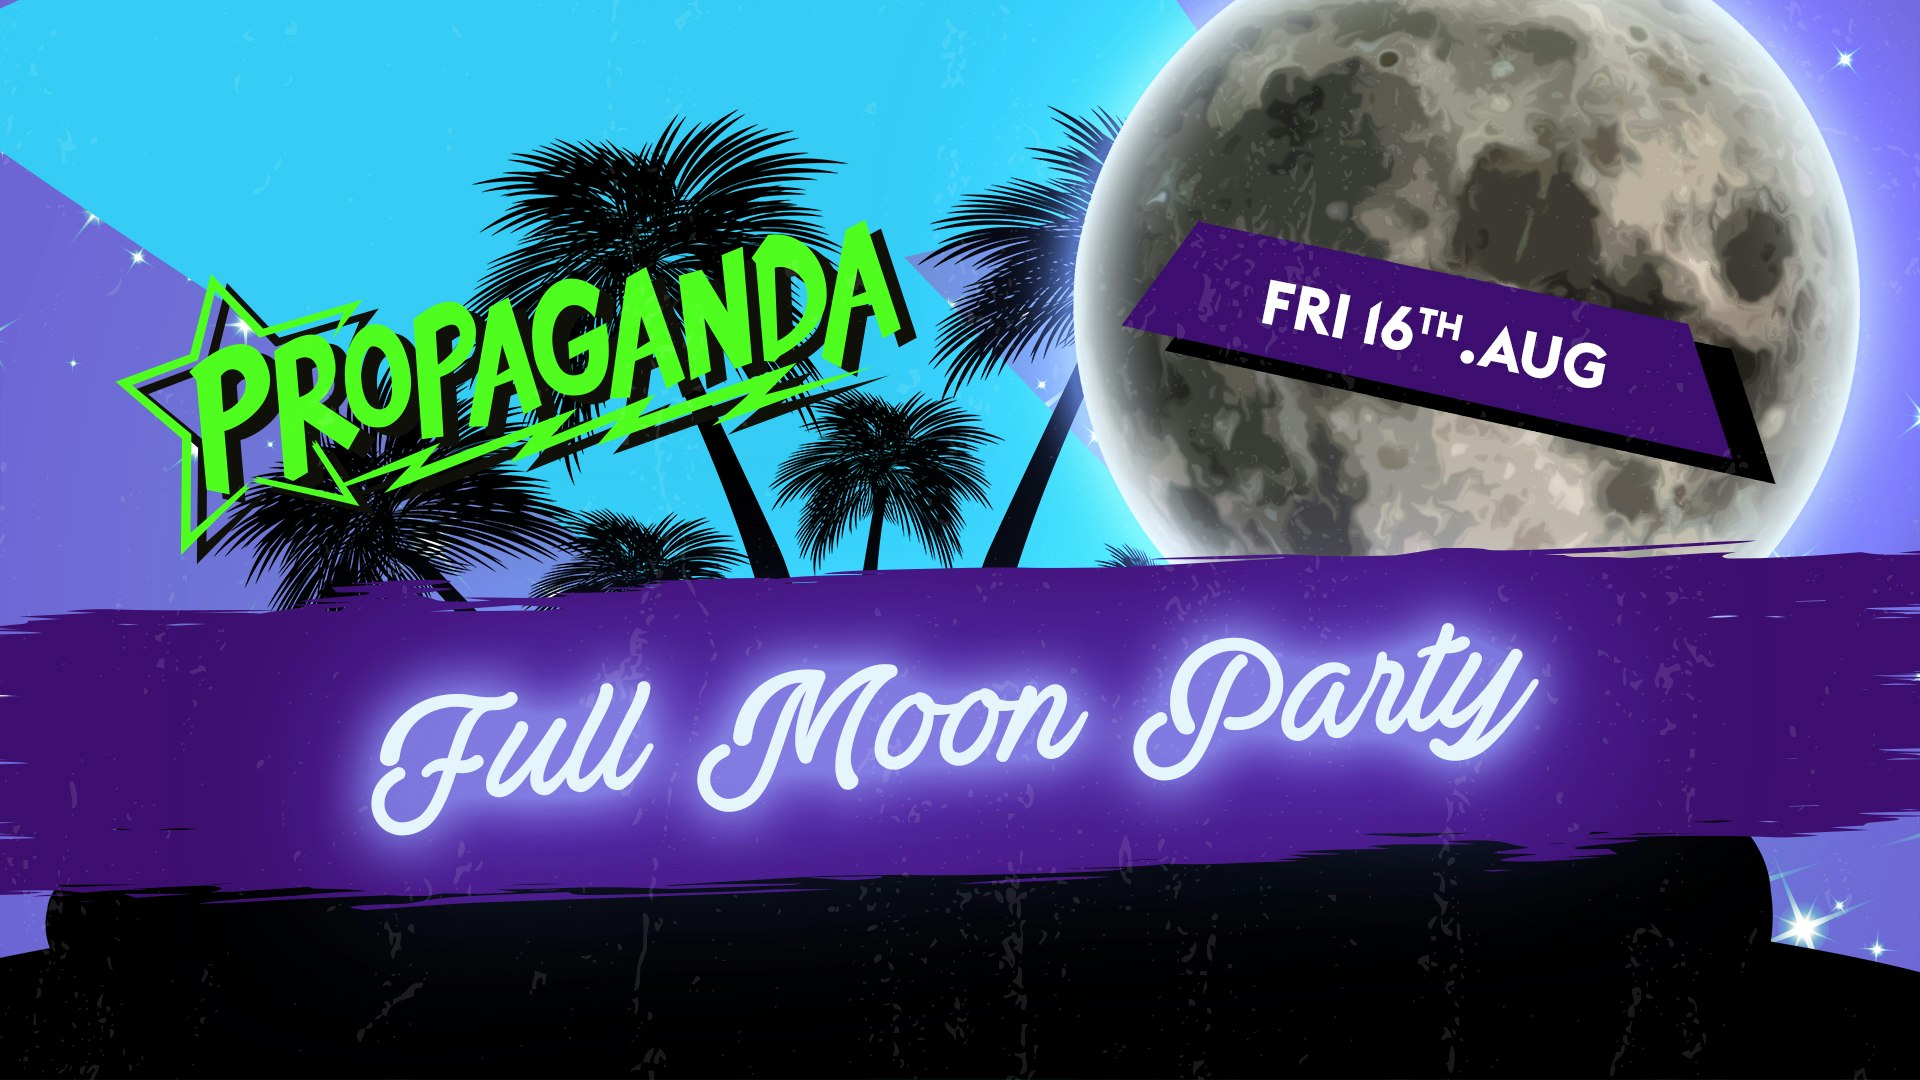 Propaganda Norwich – Full Moon Party